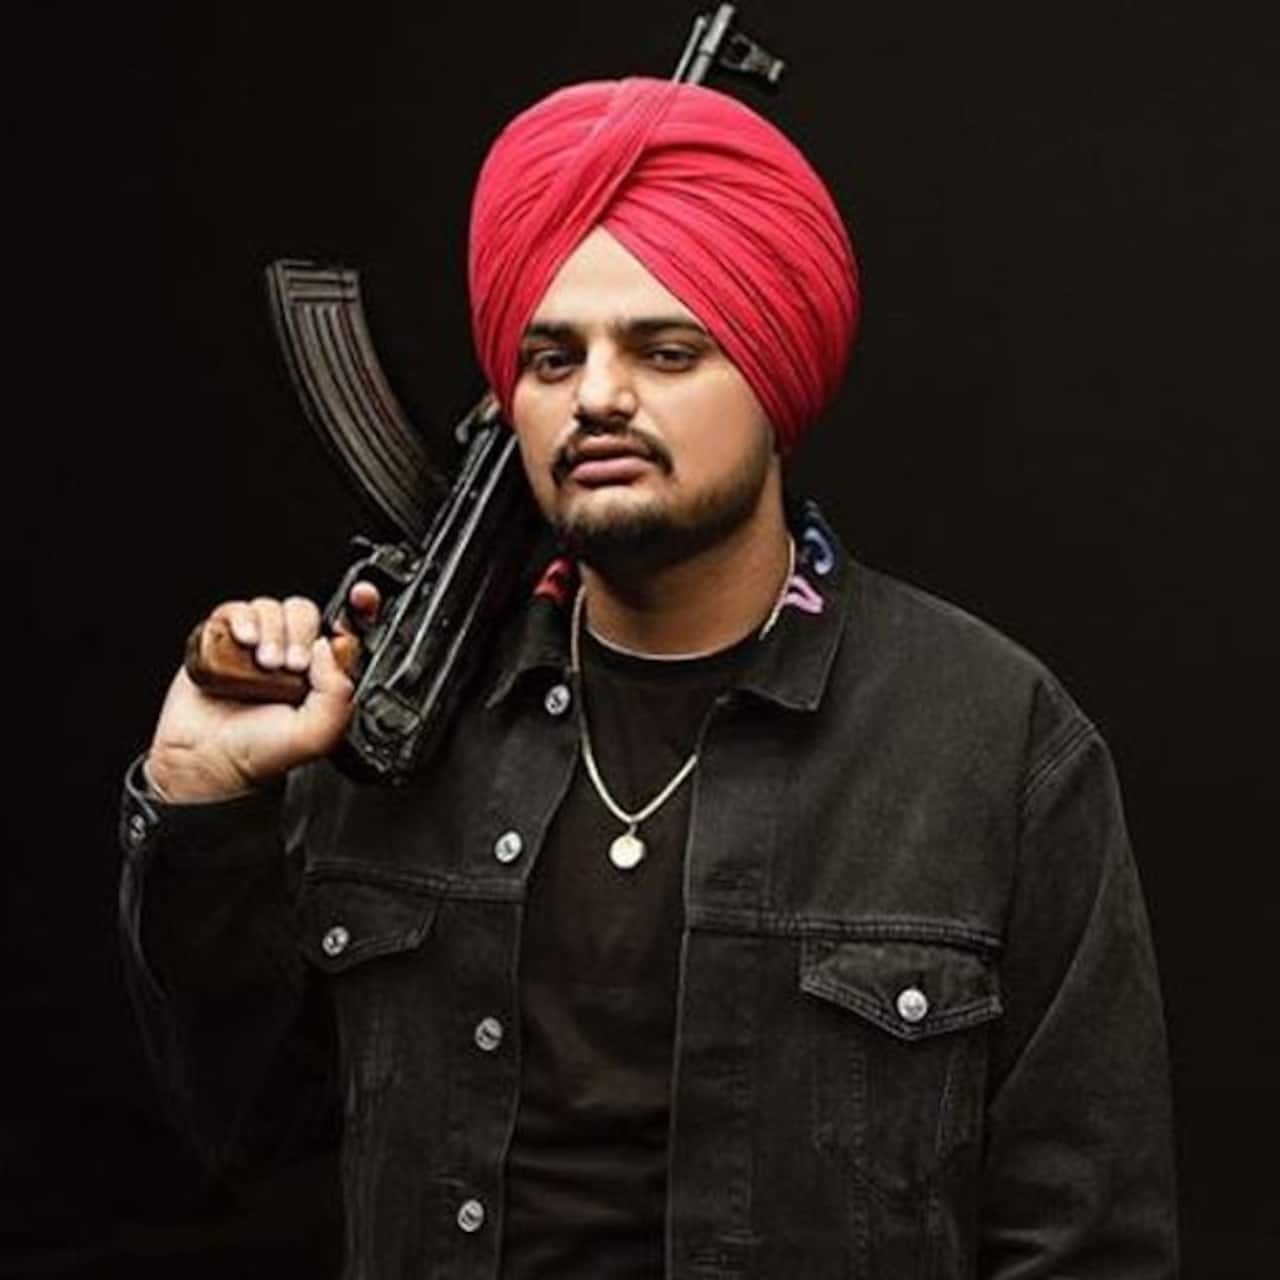 Punjab sensation singer Sidhu Moose Wala's shot dead